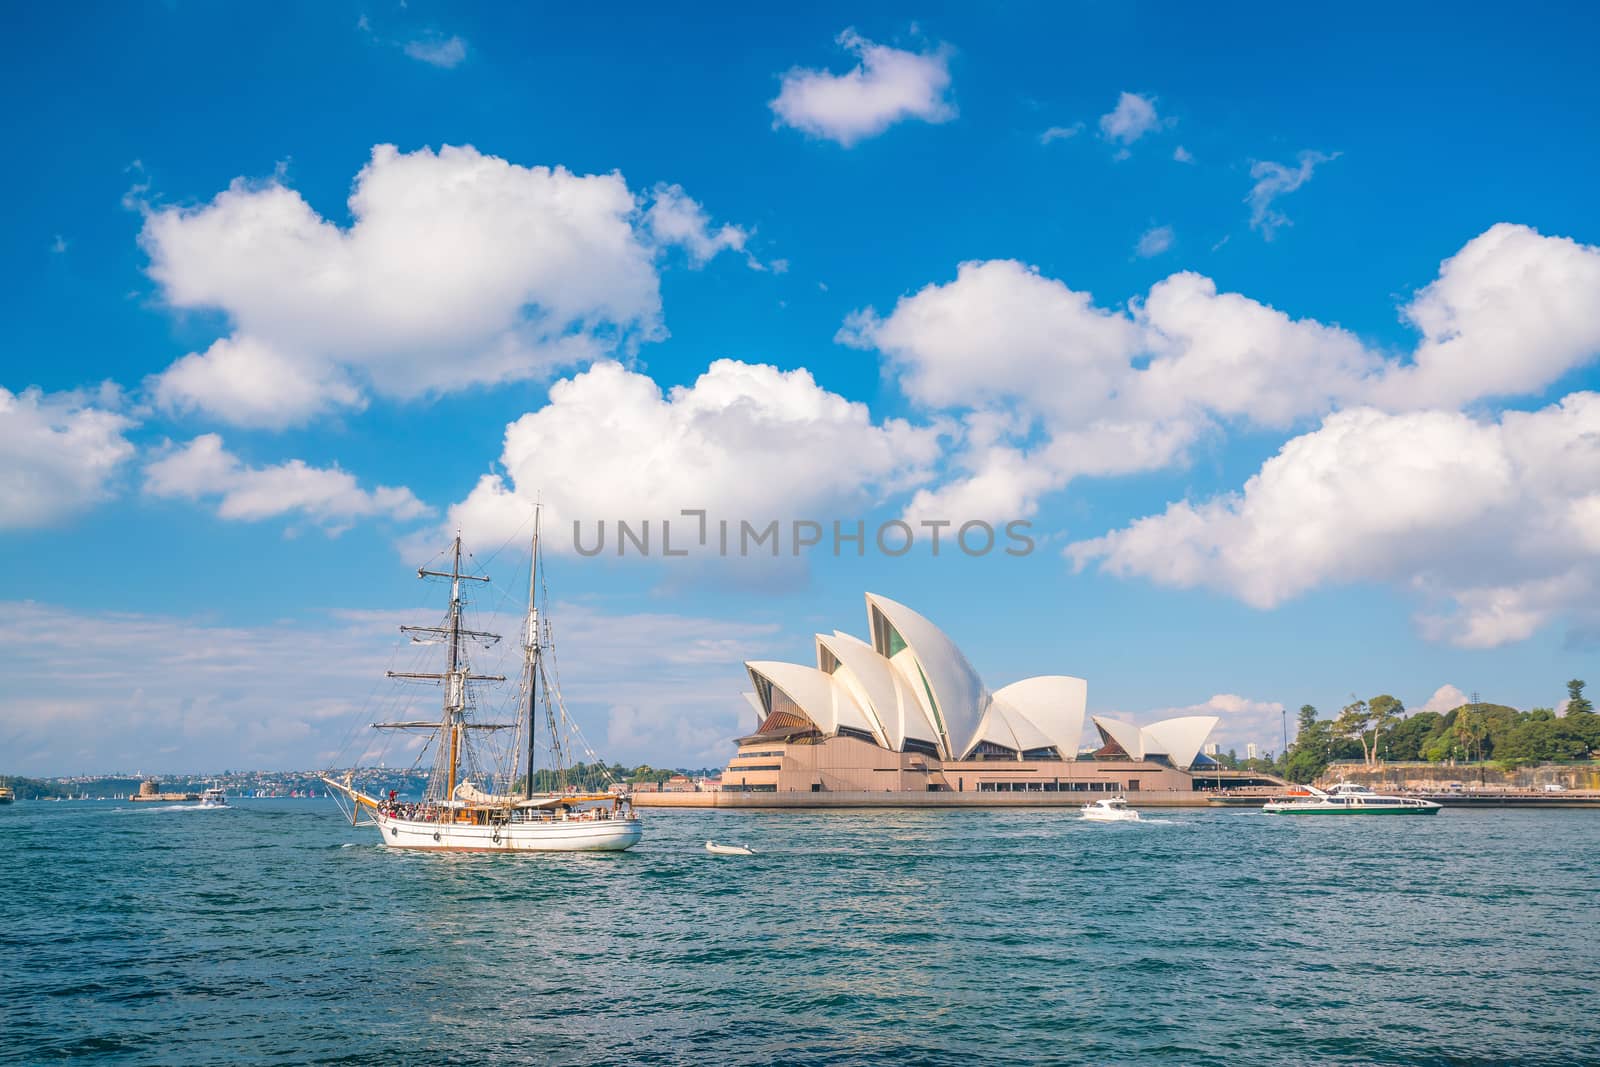  Sydney Opera House with city skyline, Sydney, Australia by f11photo